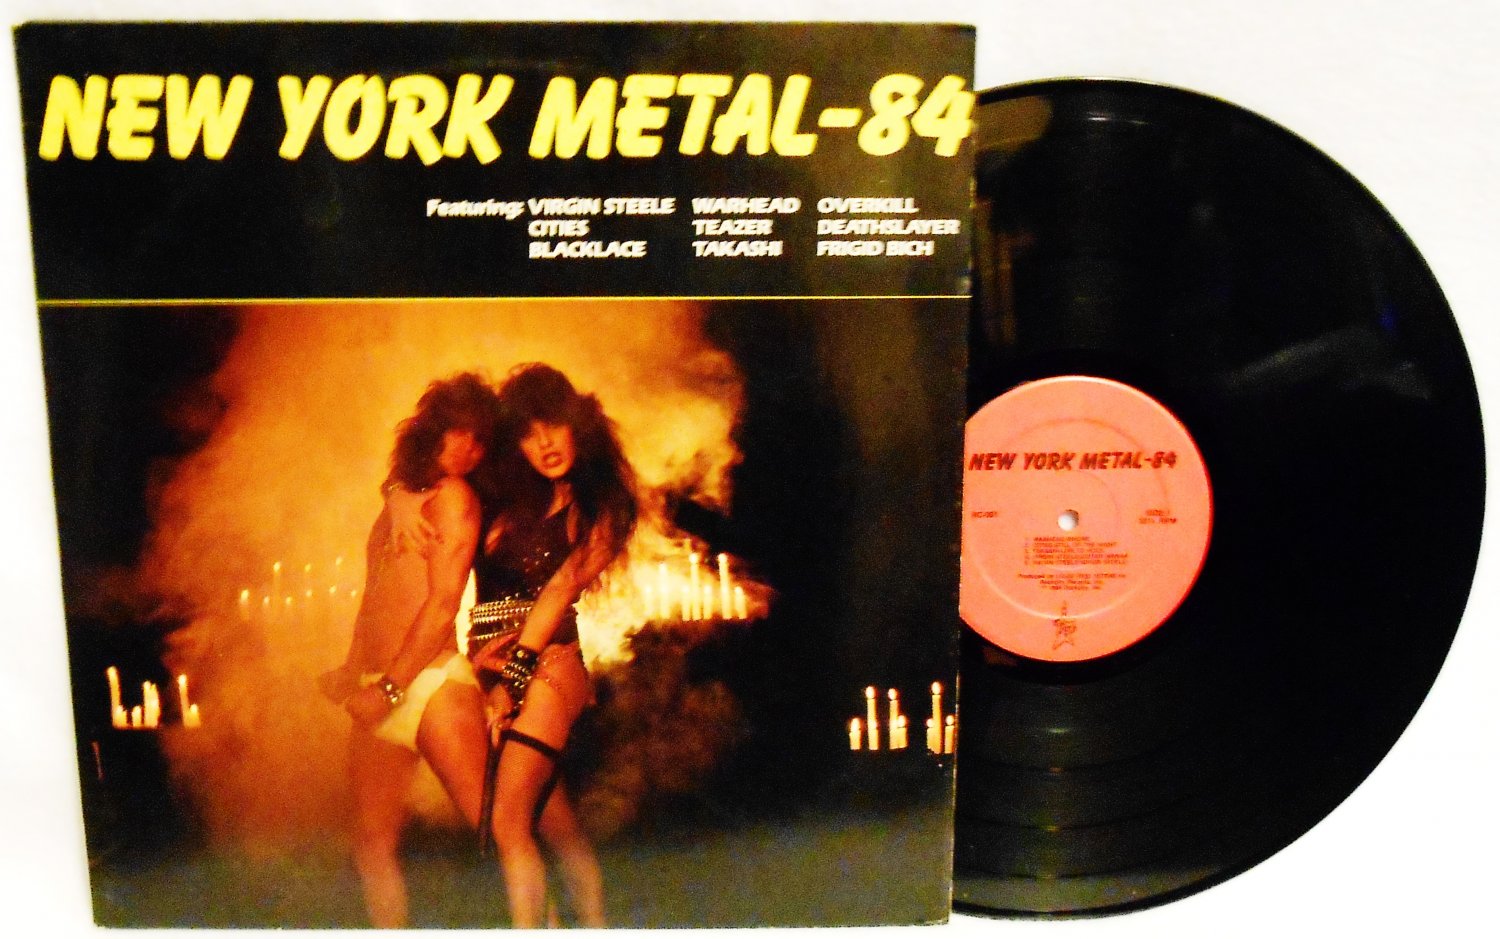 New York Metal 84 Compilation Vinyl Music Record Lp Album